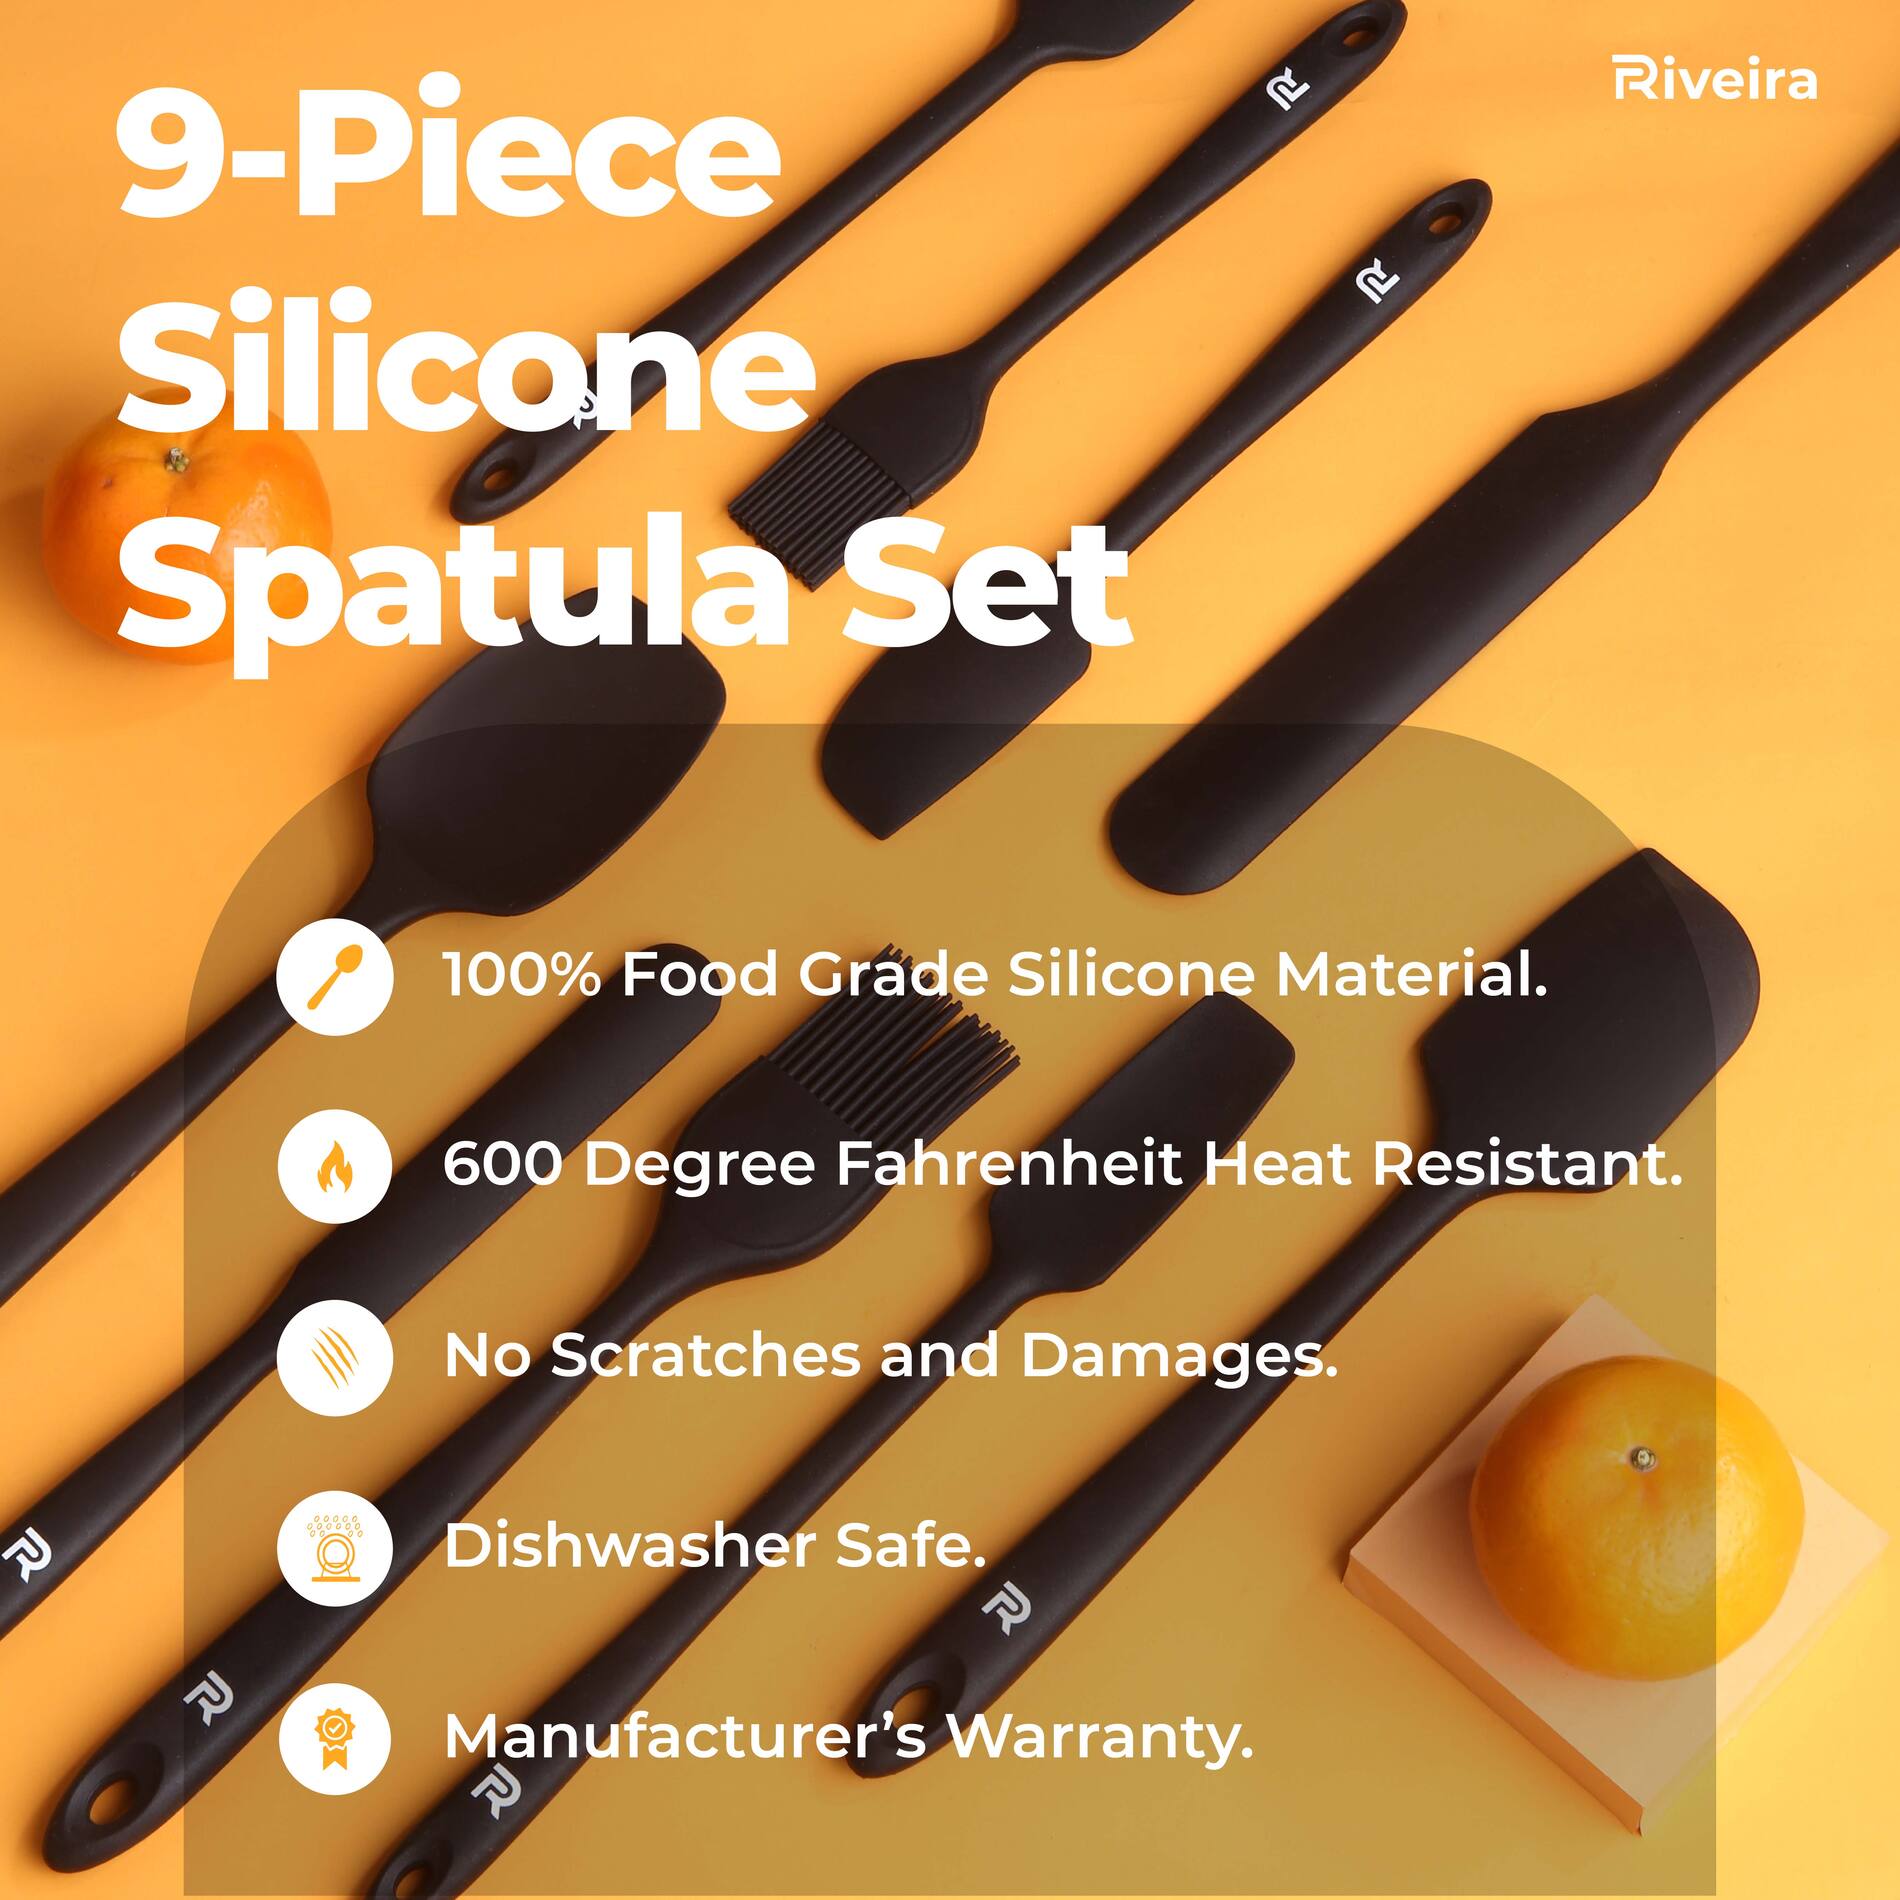 Riveira Silicone Spatula Set 9-Piece 600°F+ Heat Resistant kitchen ute